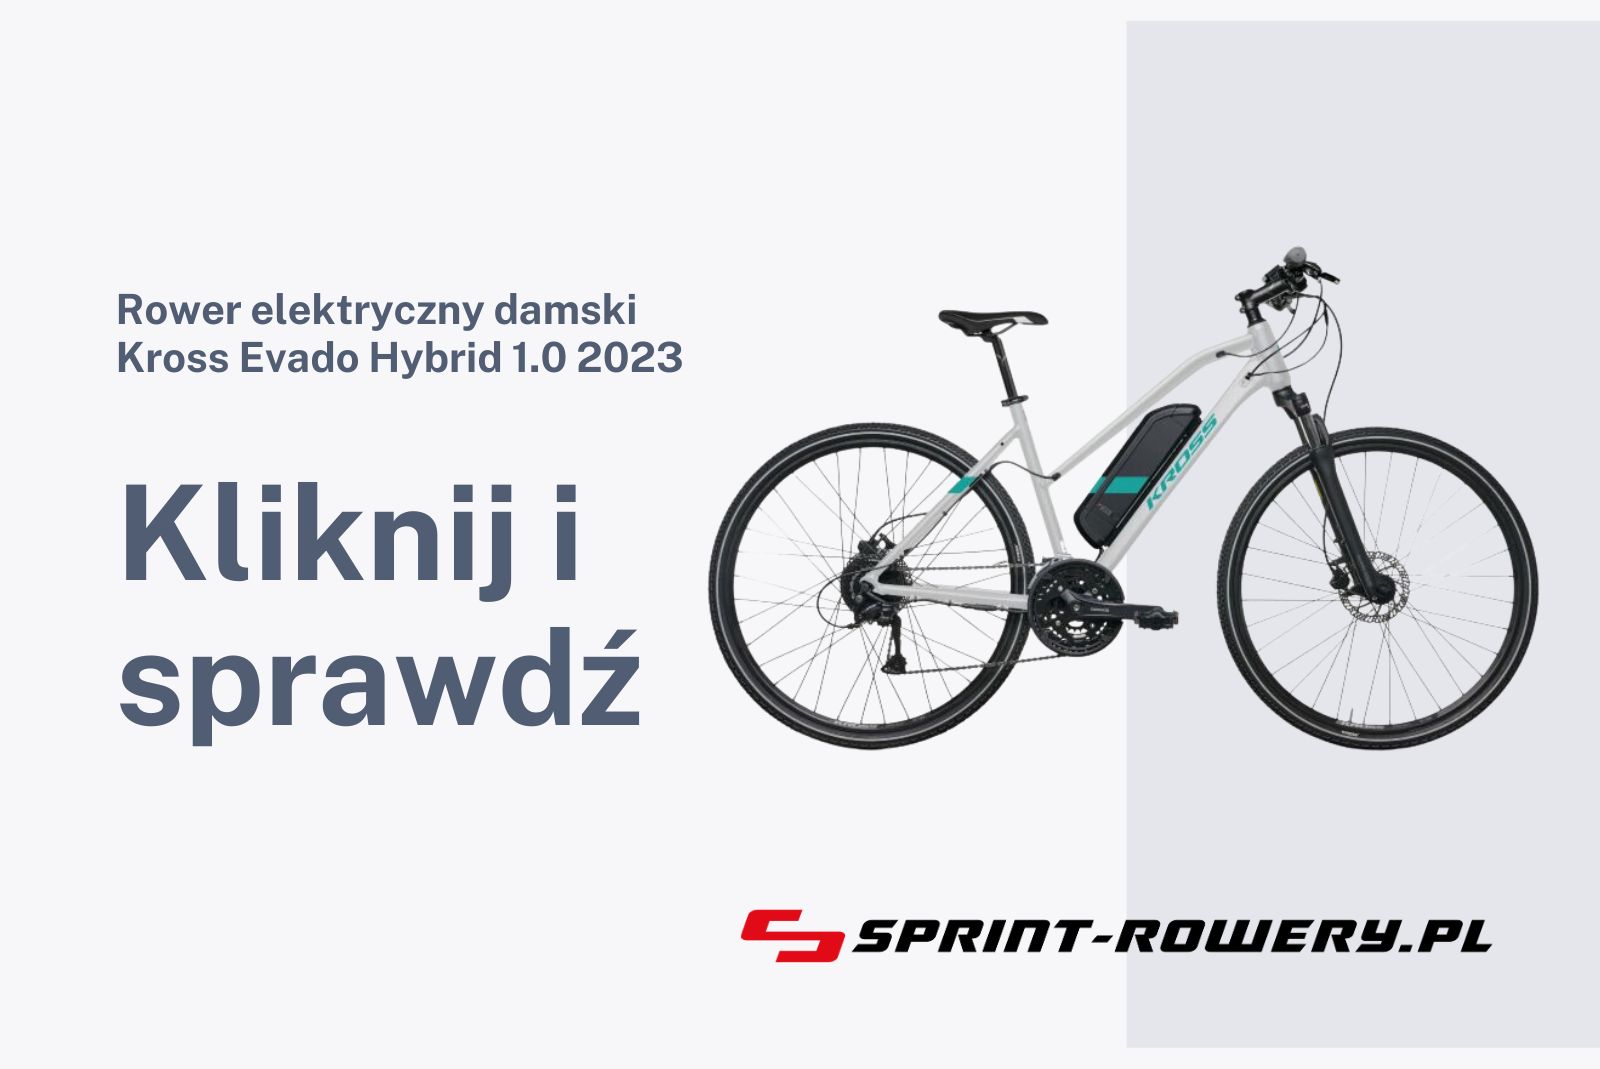 Rower elektryczny damski Kross Evado Hybrid 1.0 2023